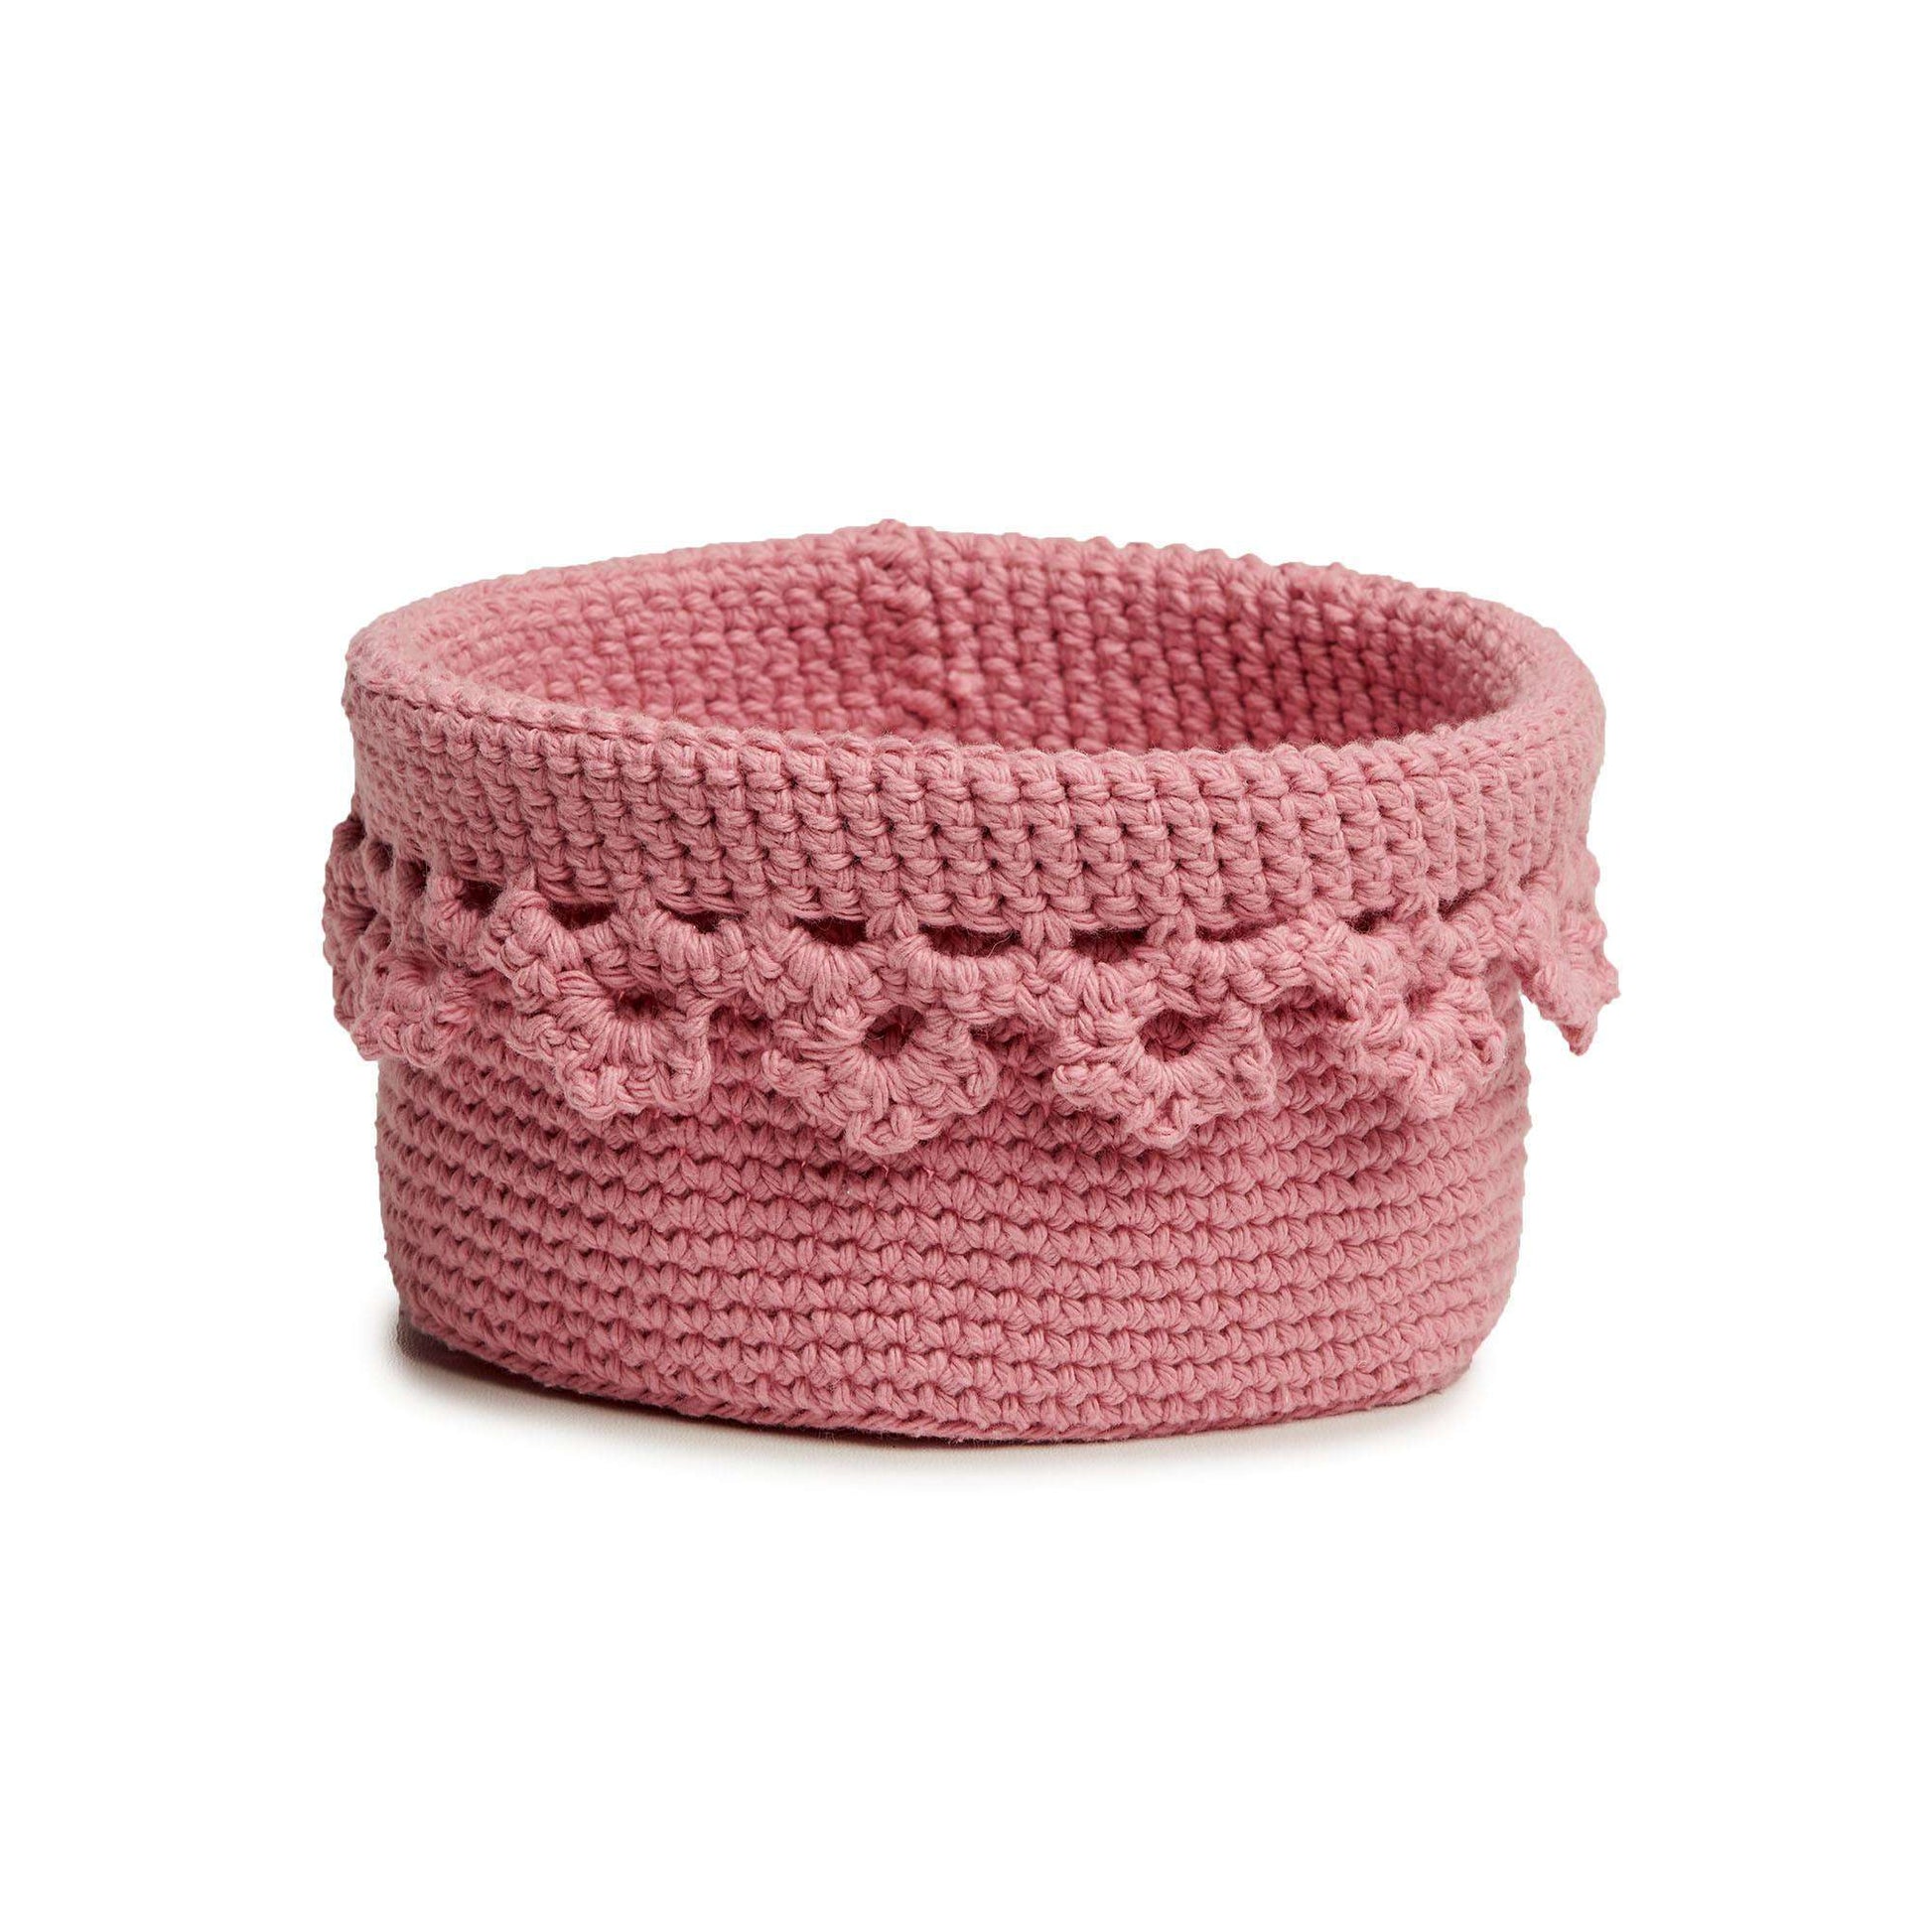 Free Lily Floral Edge Crochet Basket Pattern